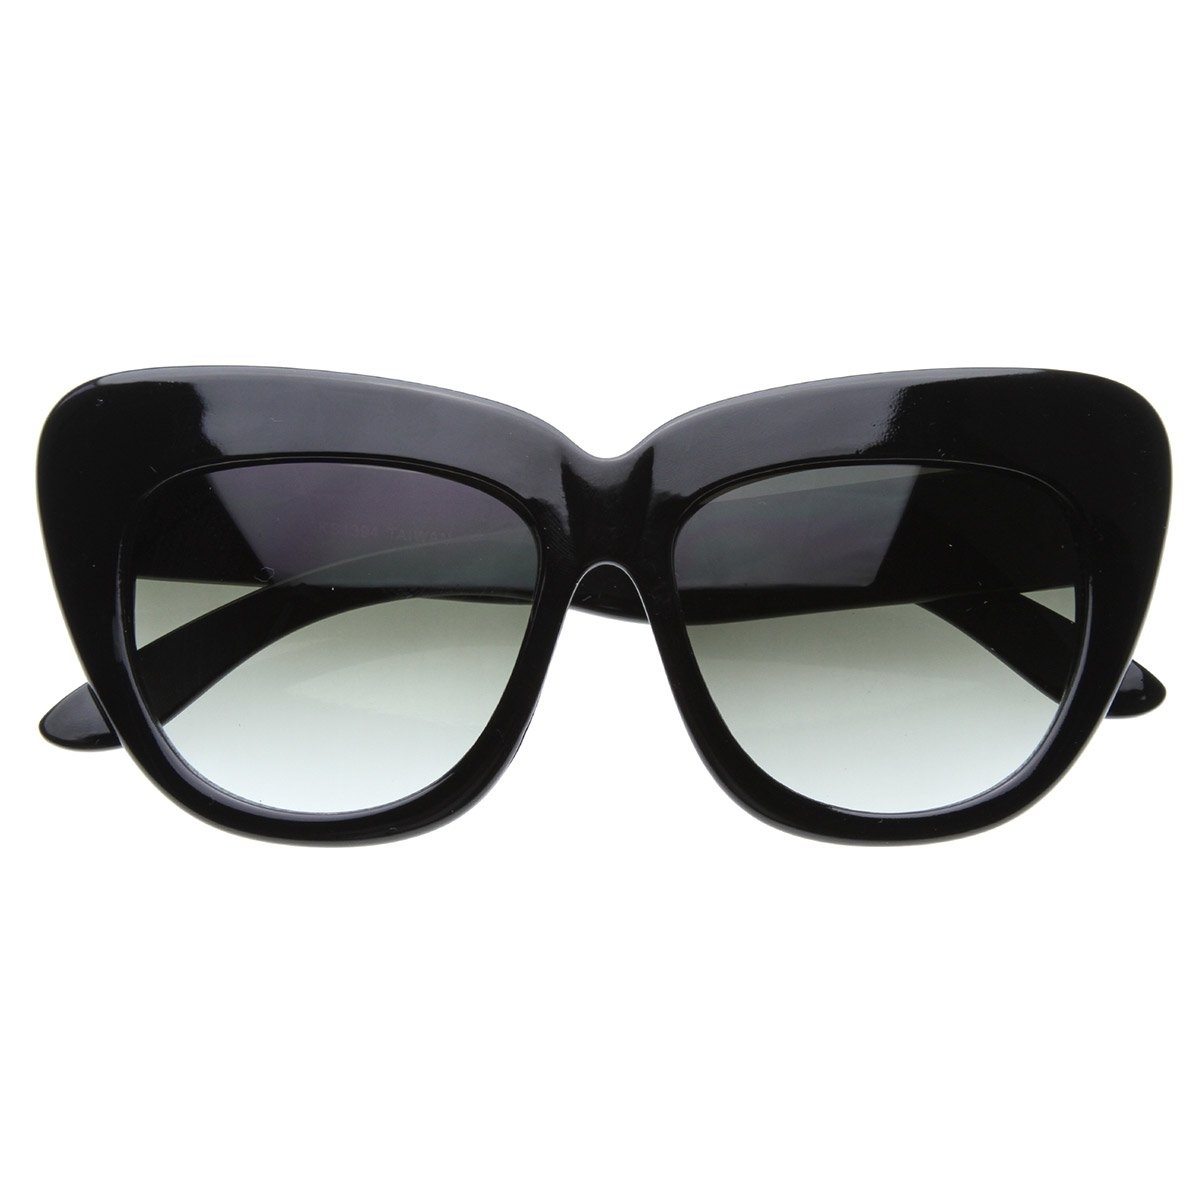 Oversized High Fashion Designer Inspired Bold Cat Eye Sunglasses Cateyes - Purple Tortoise